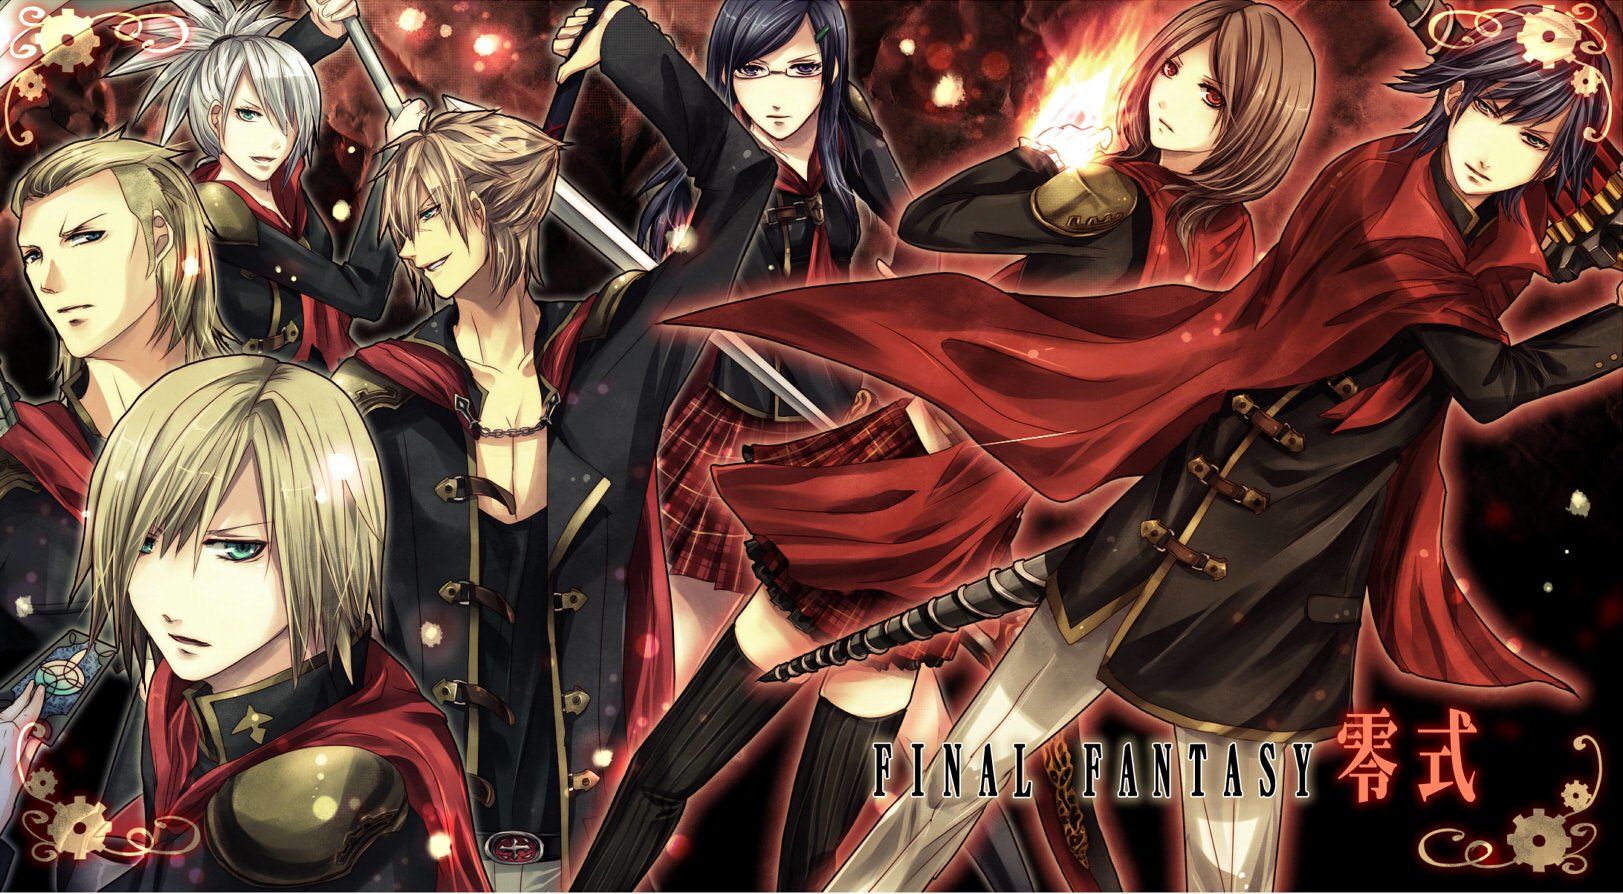 Ace (Final Fantasy) HD Wallpaper